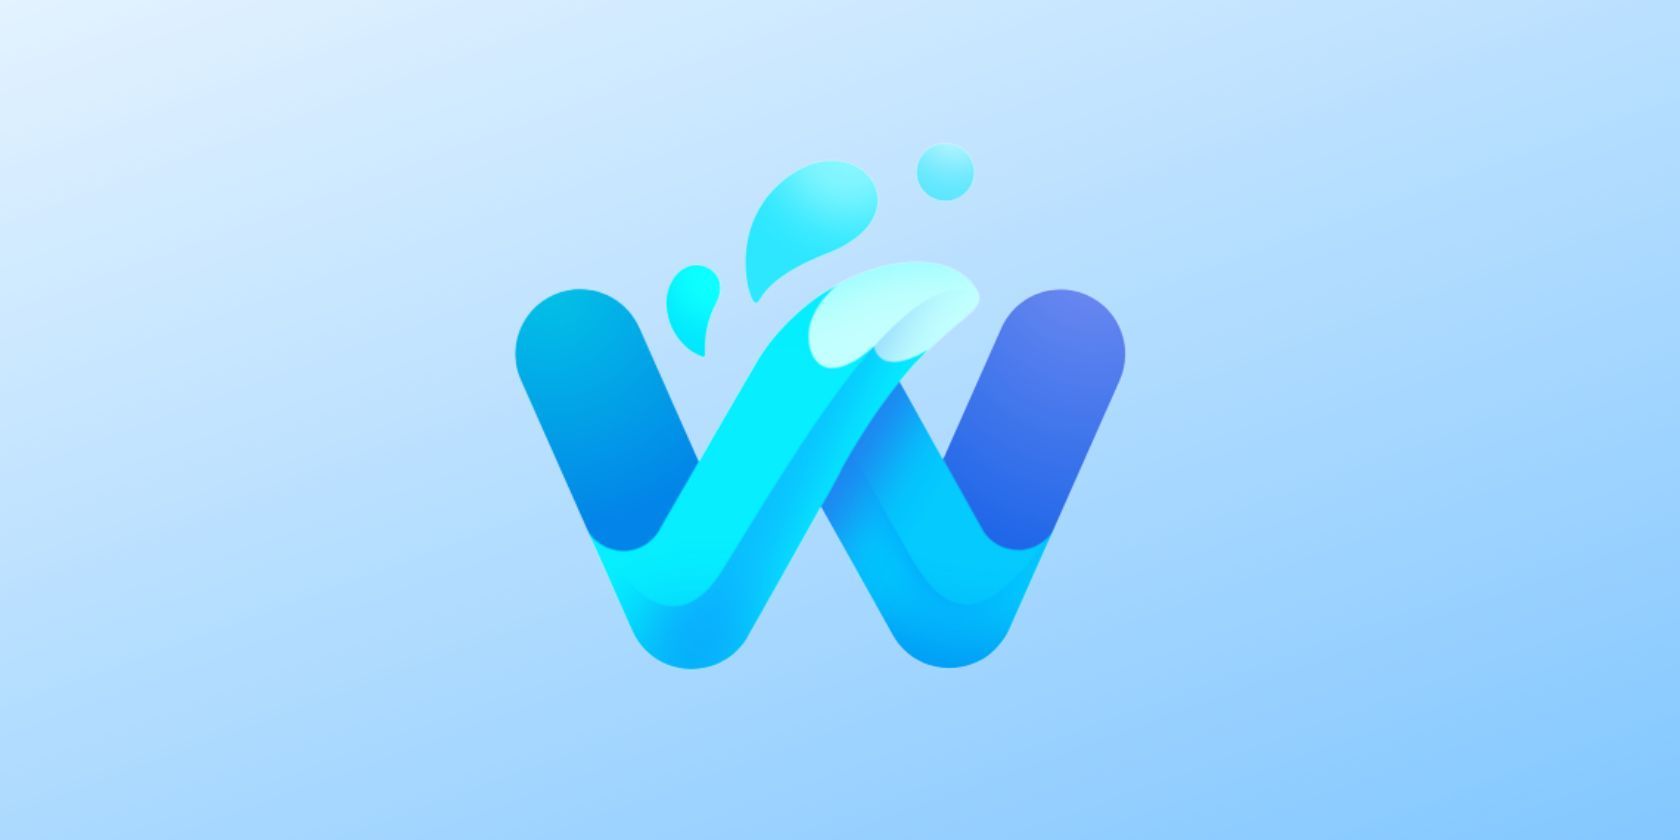 Waterfox browser logo seen on light blue background